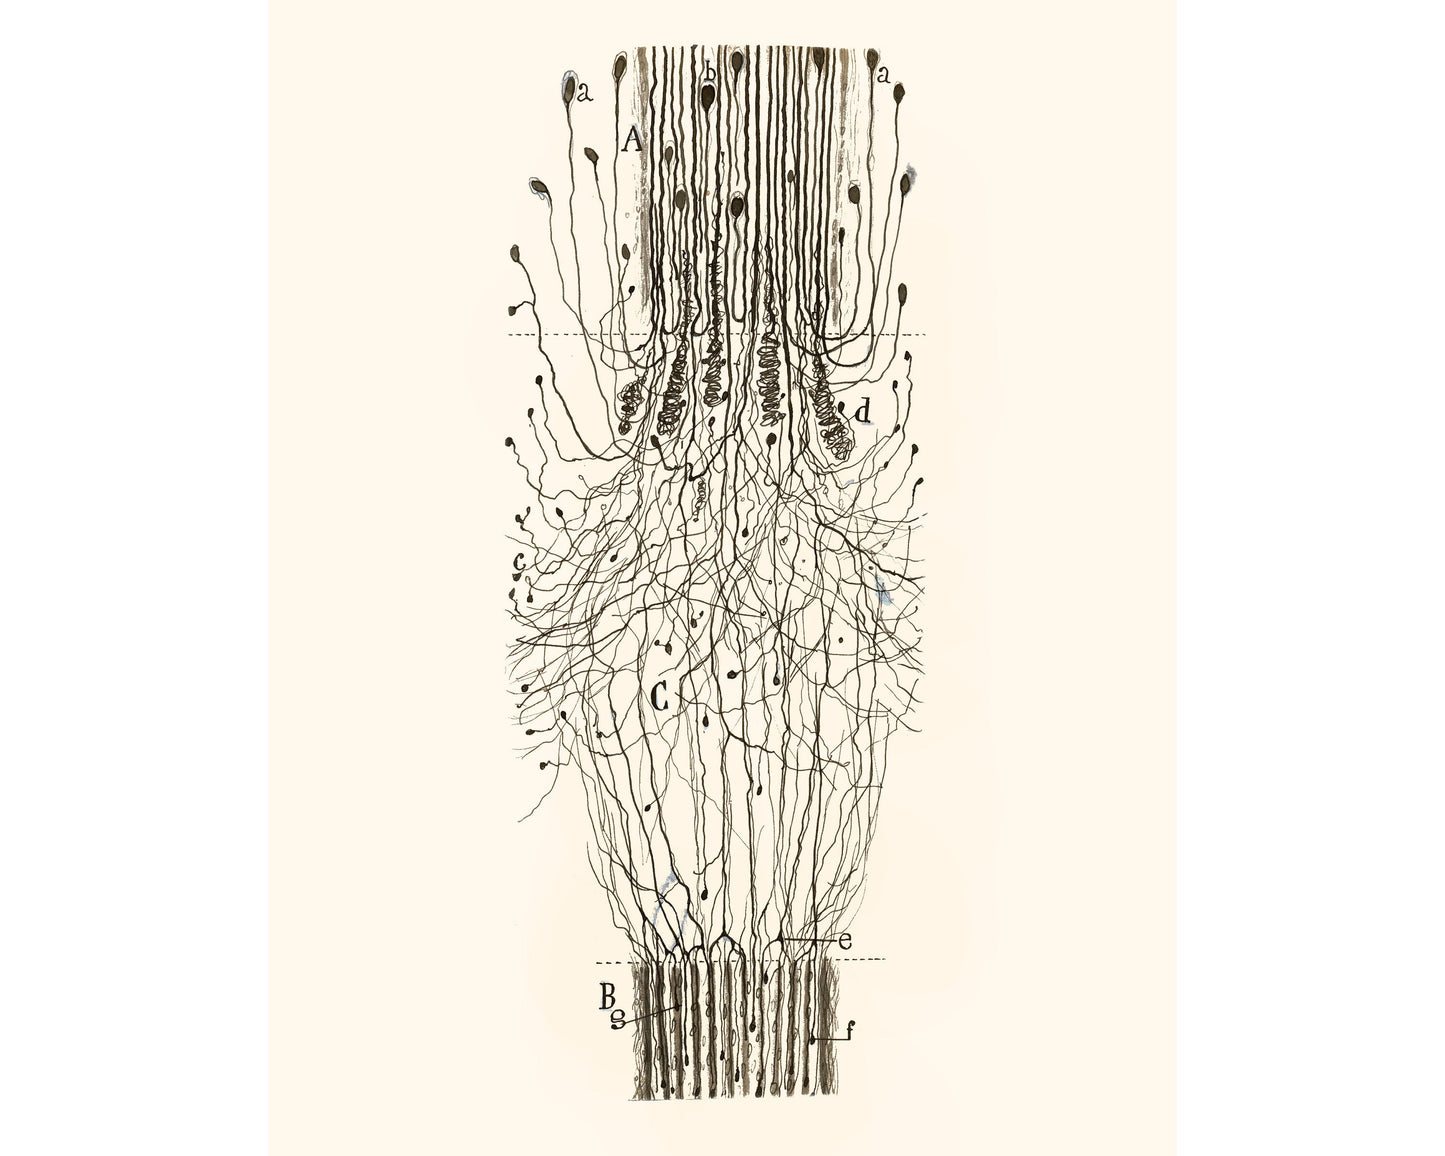 Vintage nerve cord drawing | Santiago Ramón y Cajal | Antique anatomical art | Neuroscience and Biology art | Spanish artist